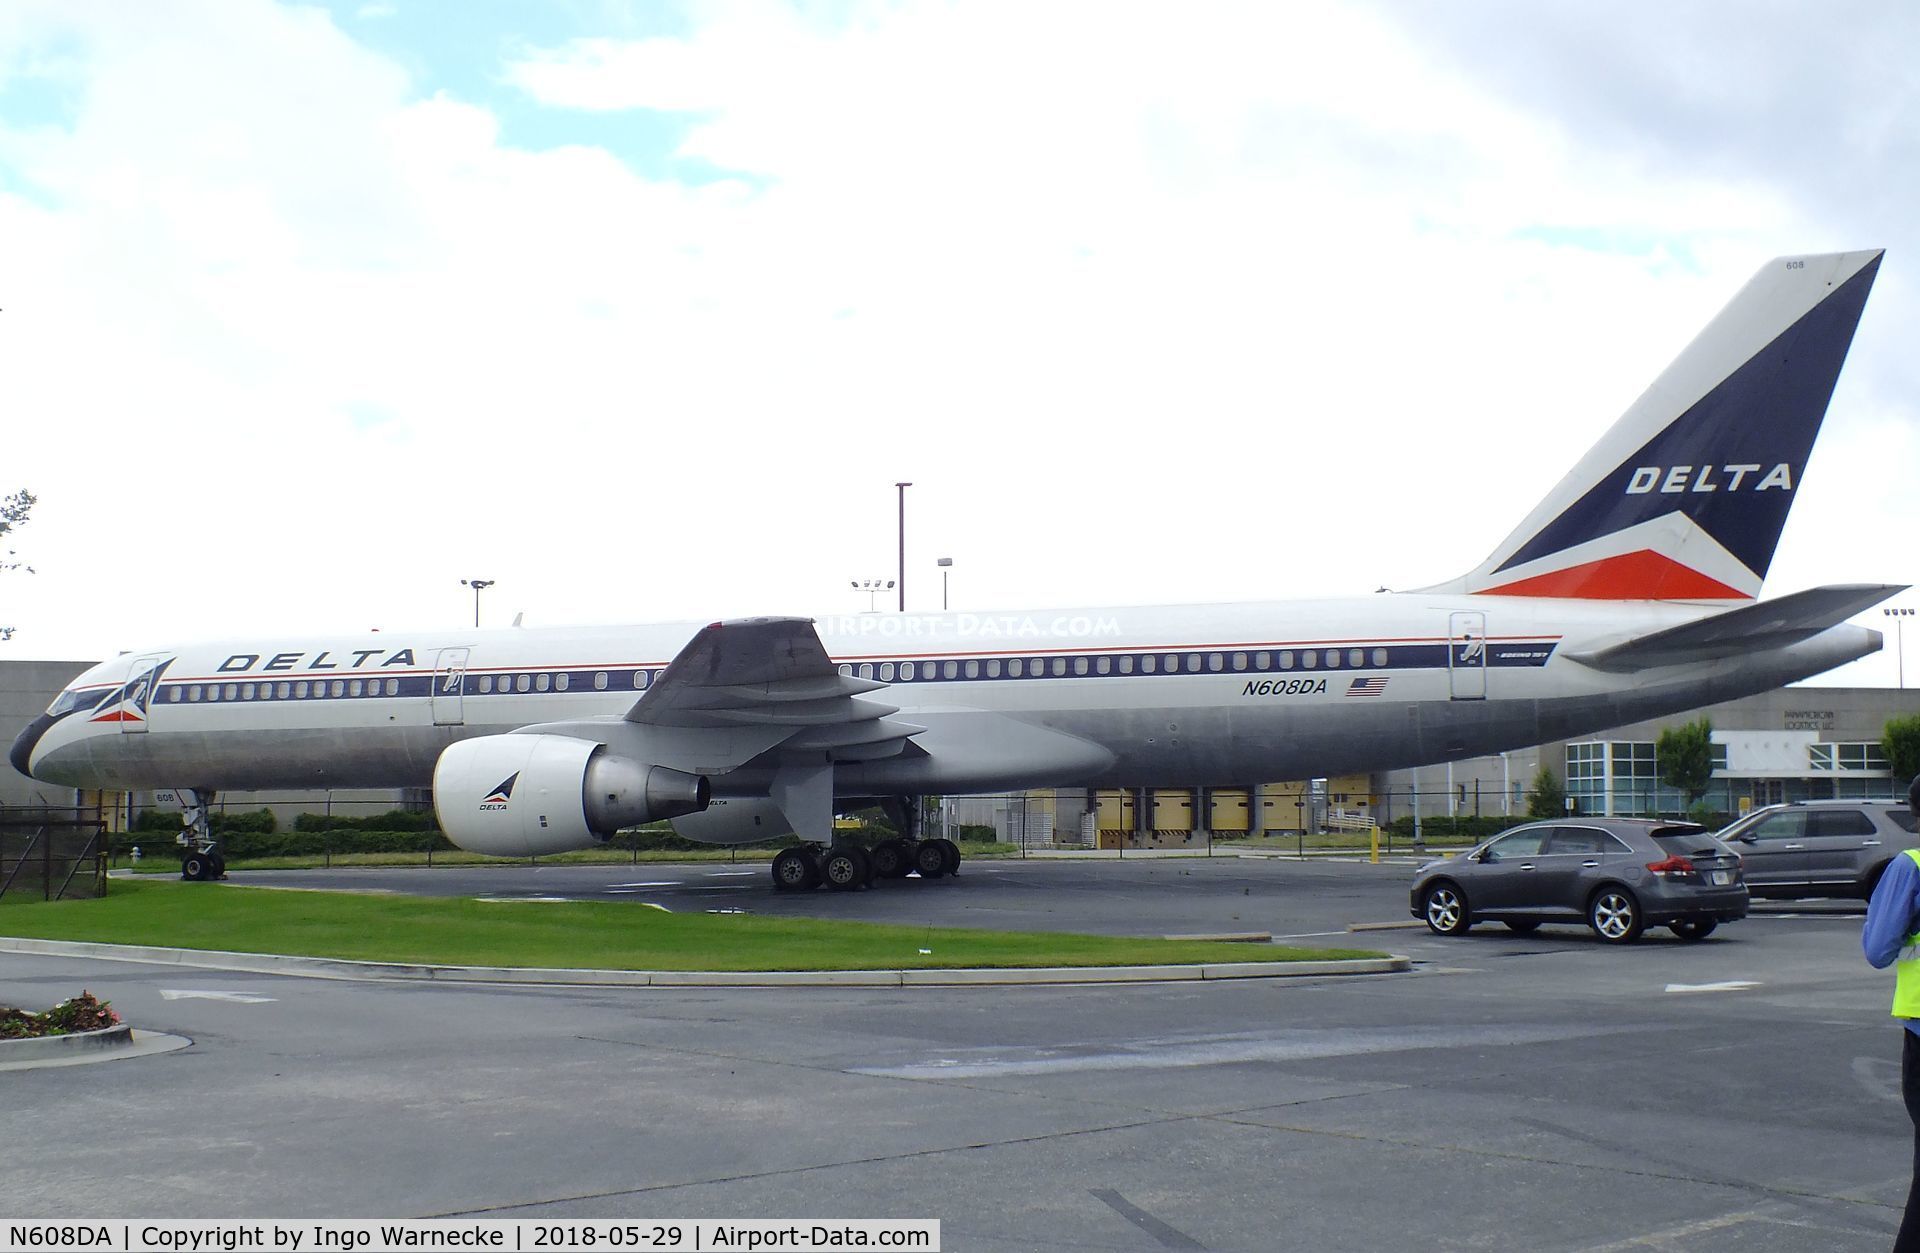 N608DA, 1985 Boeing 757-232 C/N 22815, Boeing 757-232 at the Delta Flight Museum, Atlanta GA